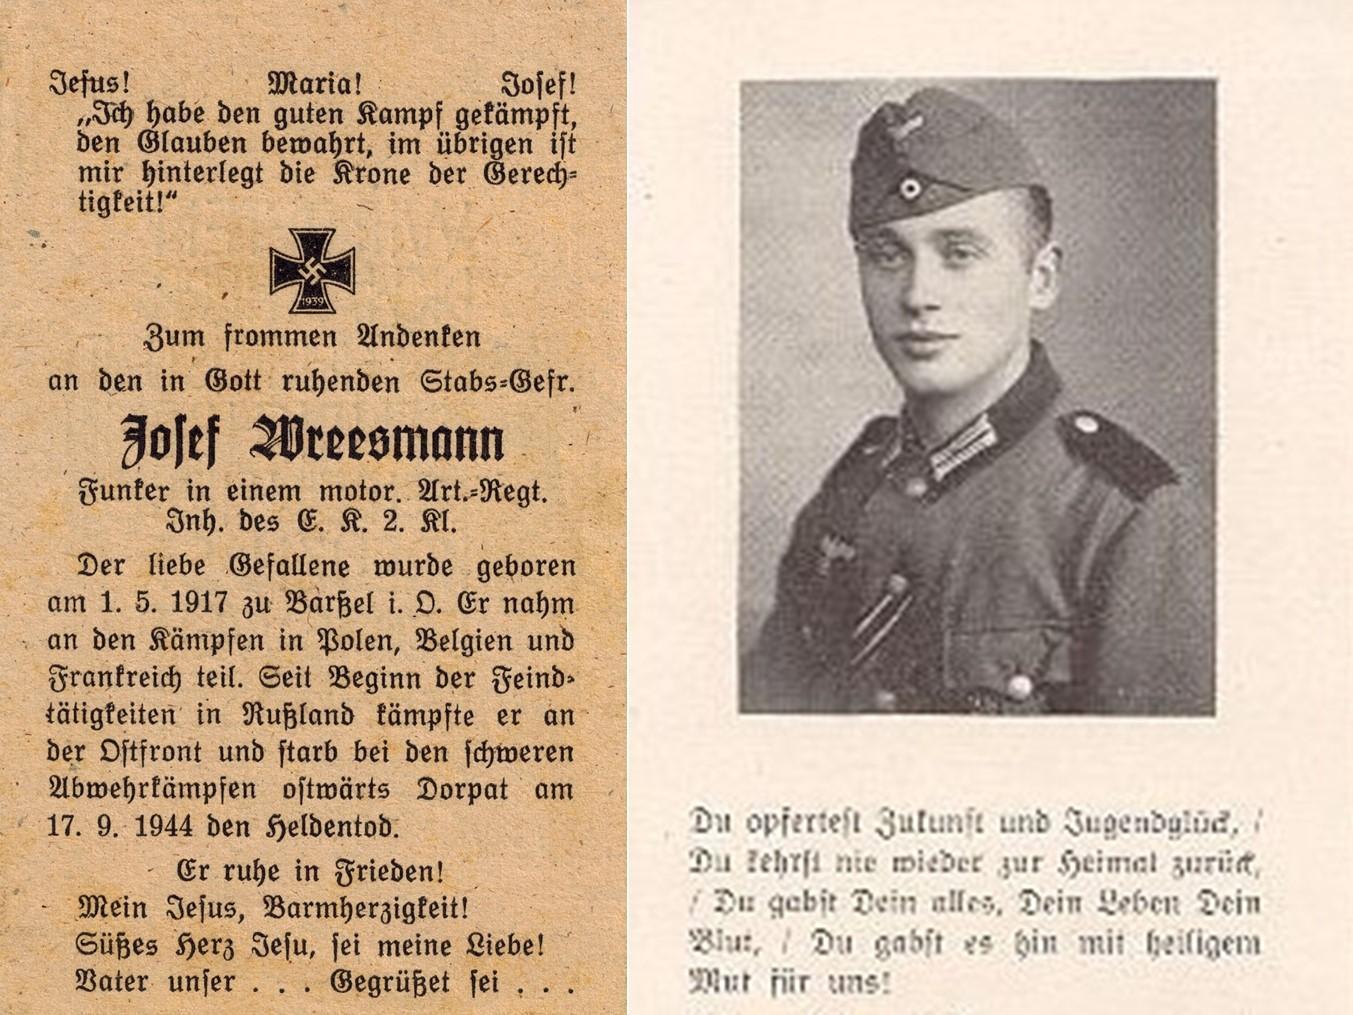 Kriegsopfer des 2. Weltkrieges Josef Wreesmann 17.09.1944